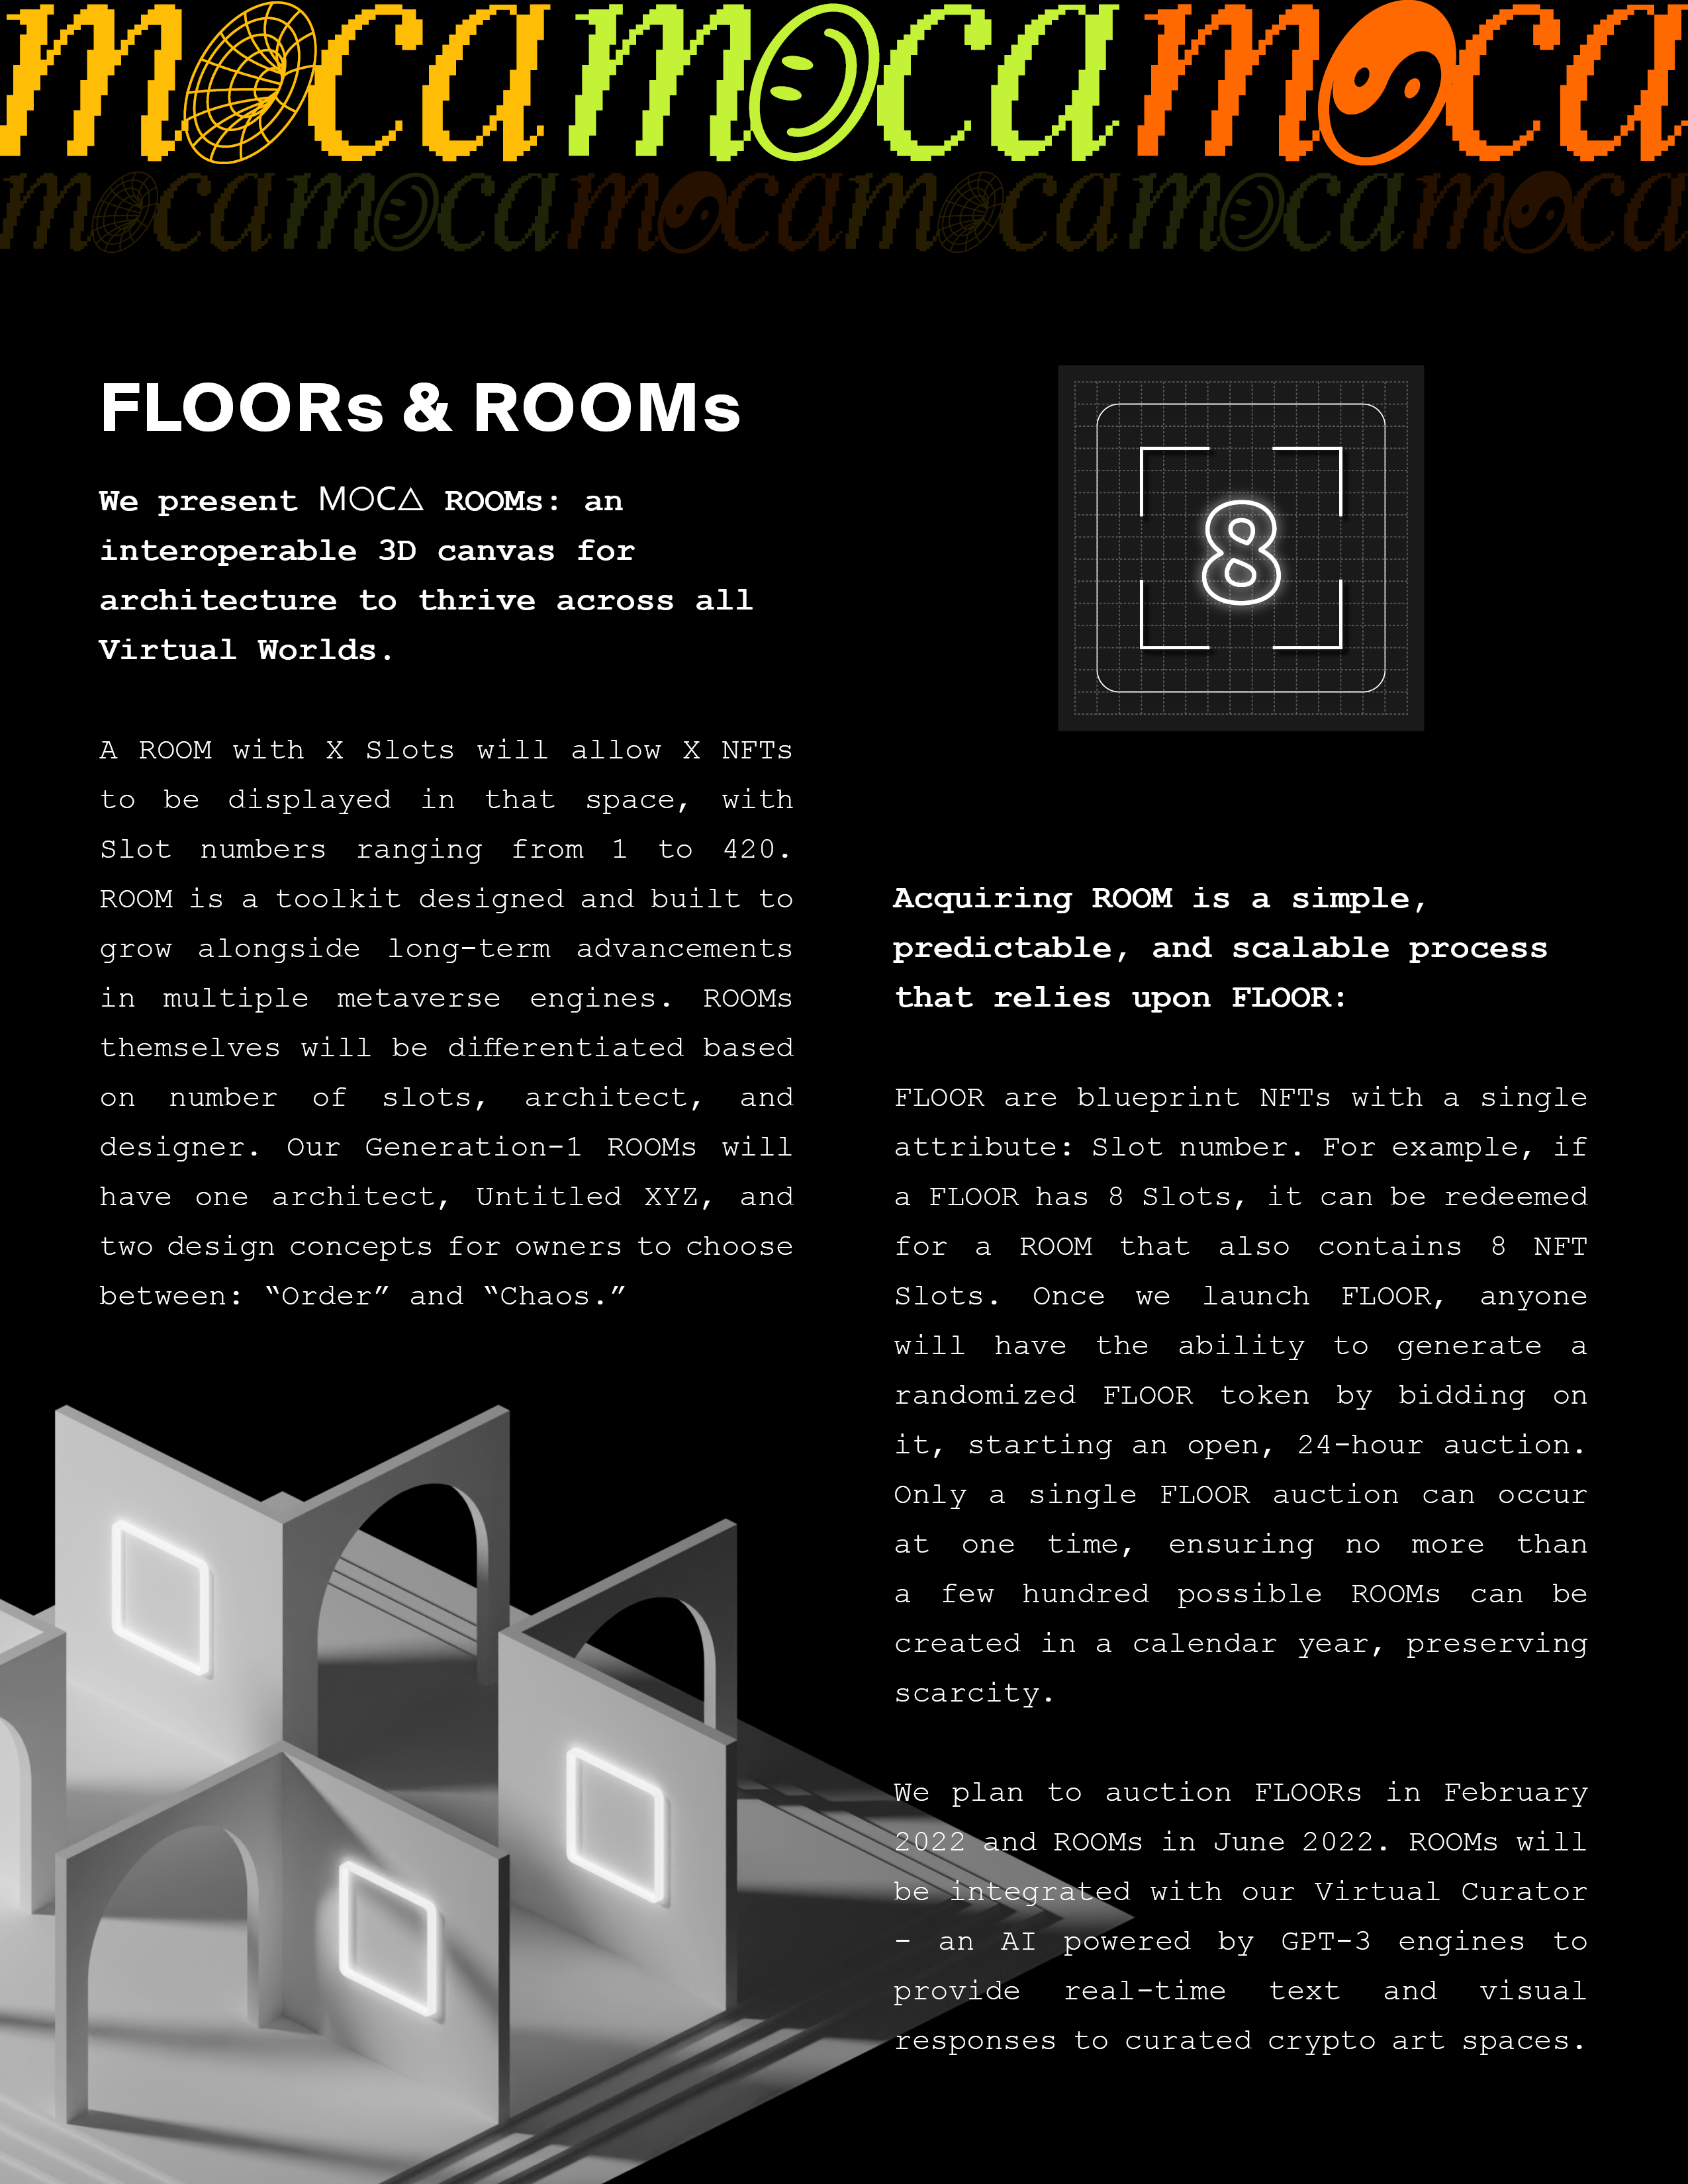 Floors & Rooms